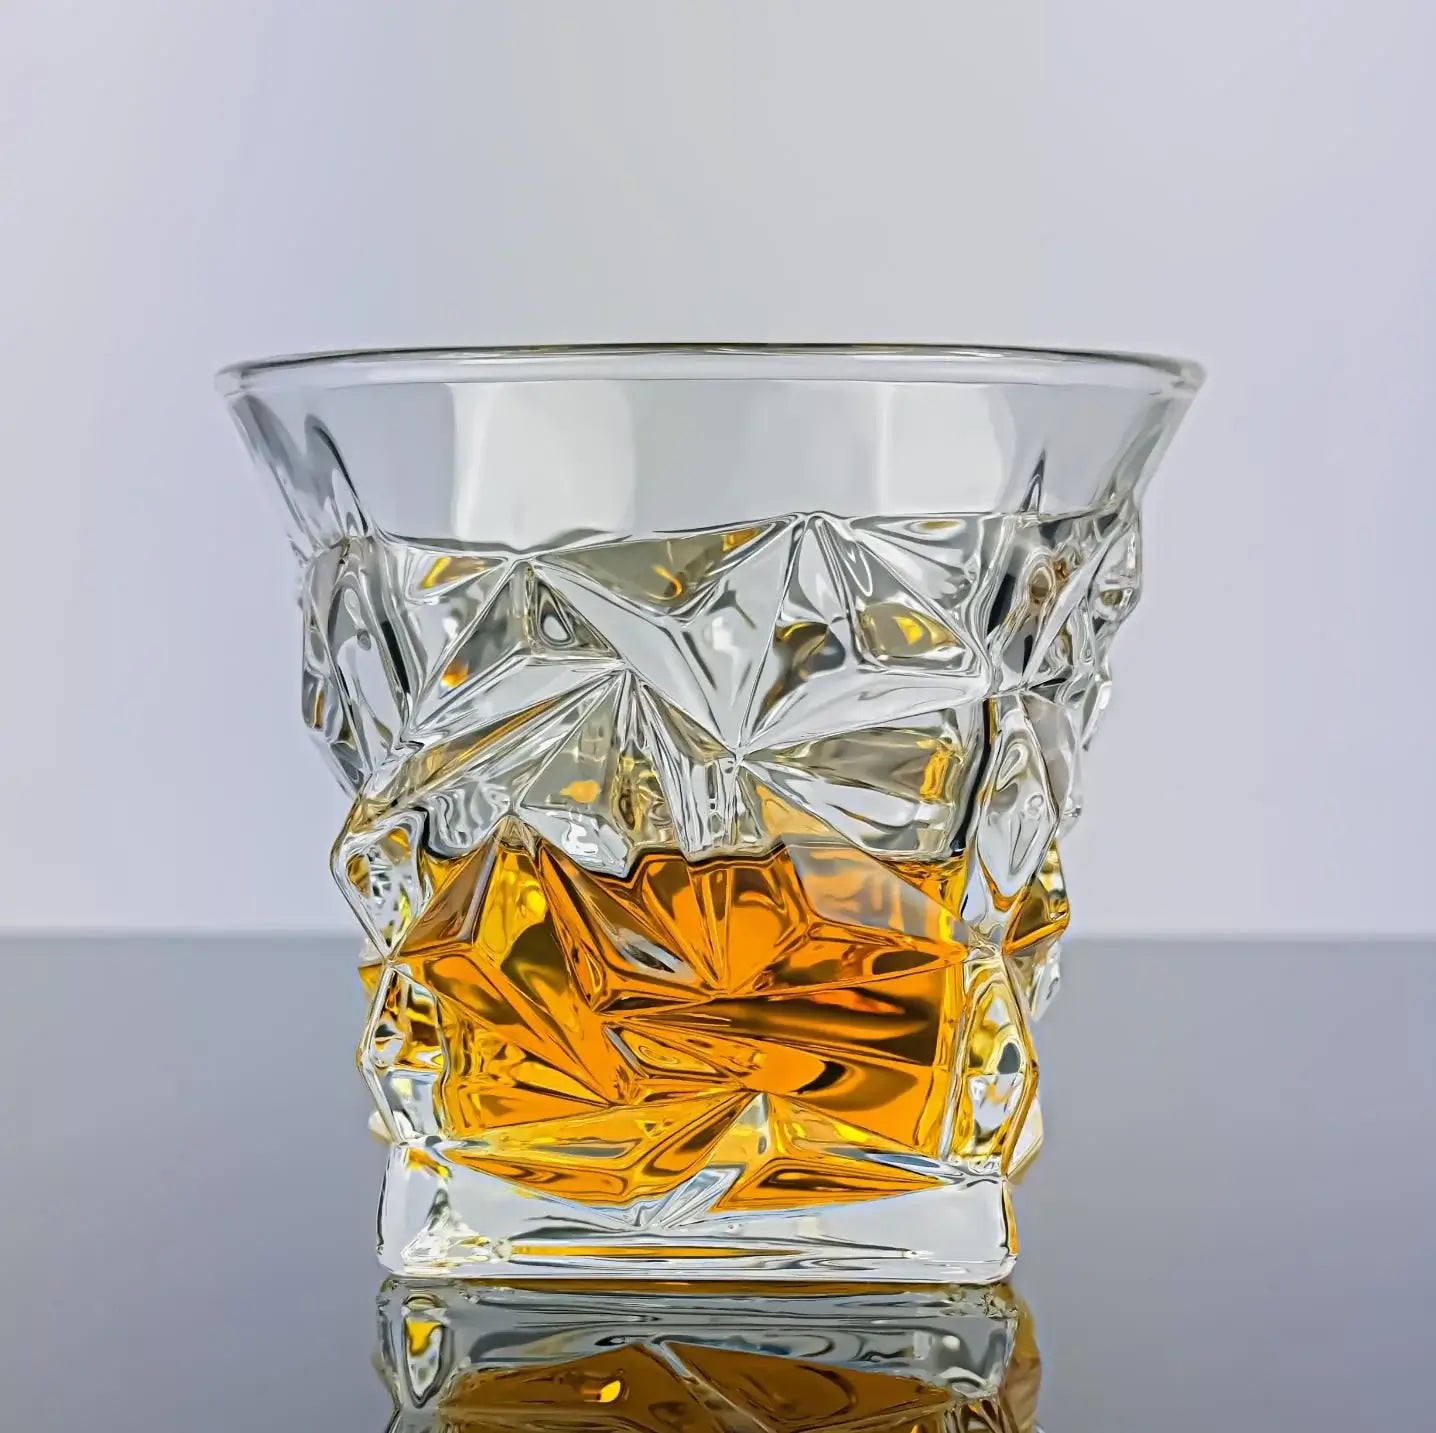 Jagged edge whisky decanter matching glass Solkatt Designs